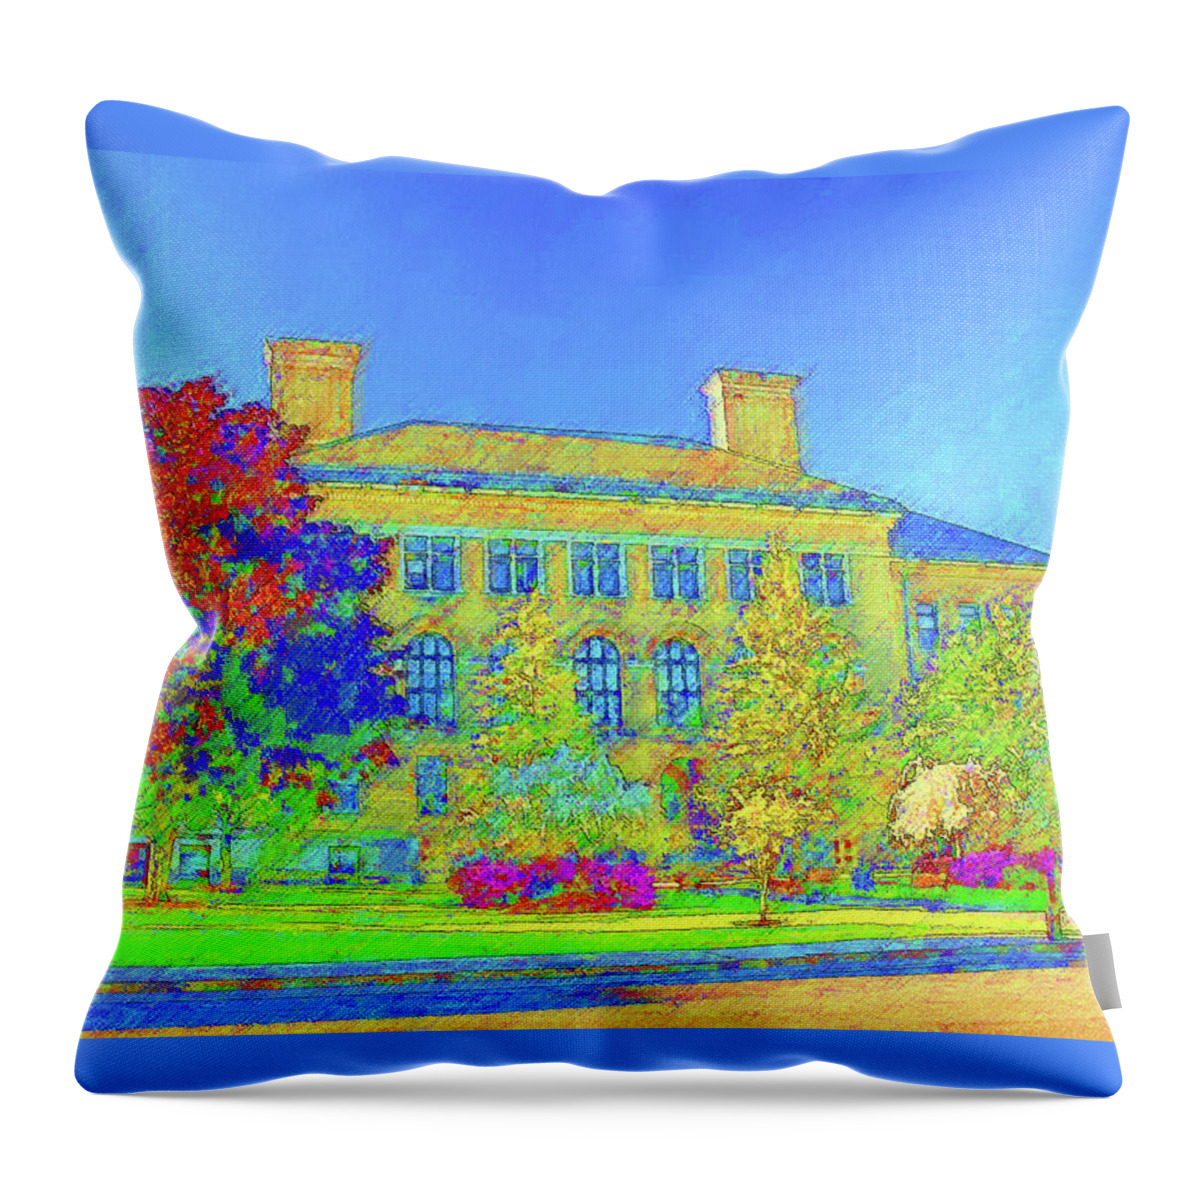 University Of Massachusetts Throw Pillow featuring the mixed media University of Massachusetts by DJ Fessenden